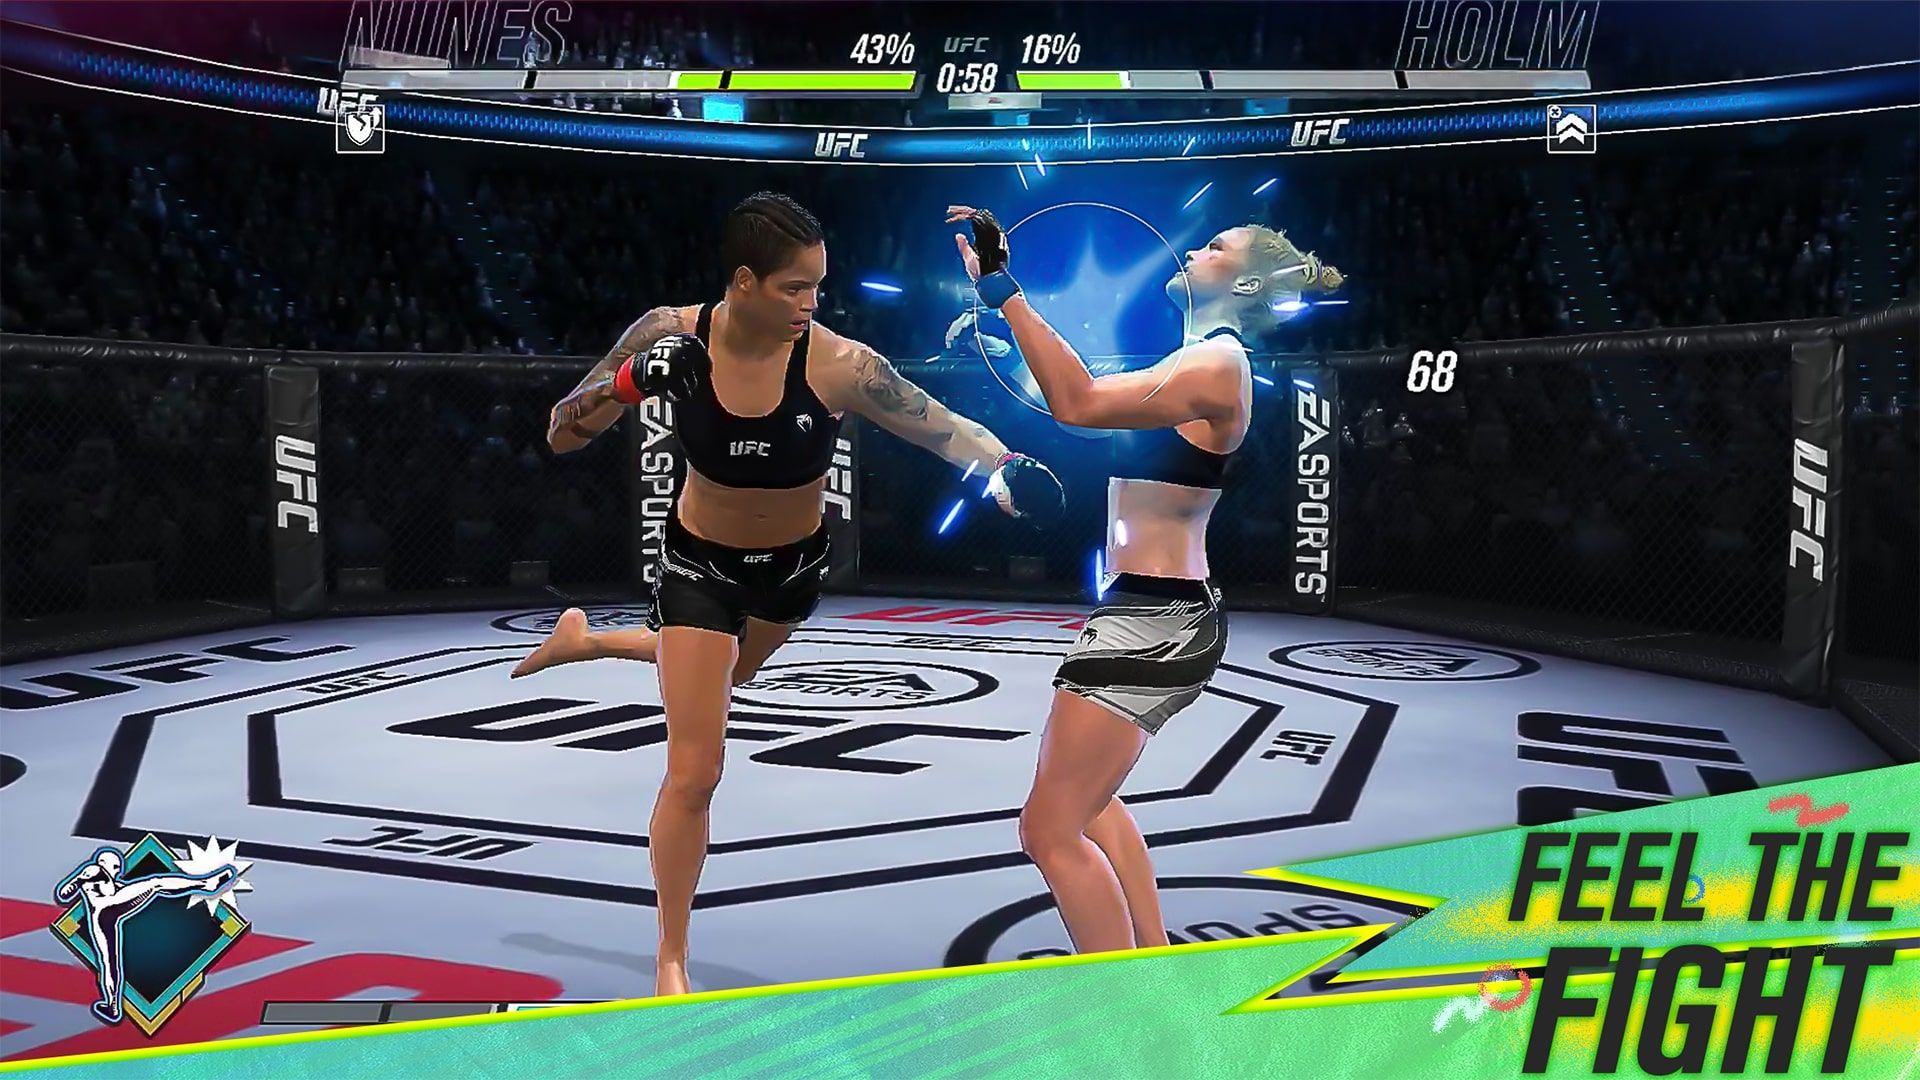 game-pertarungan-terbaik-android-ea-sports-ufc-mobile-2-feel-the-fight